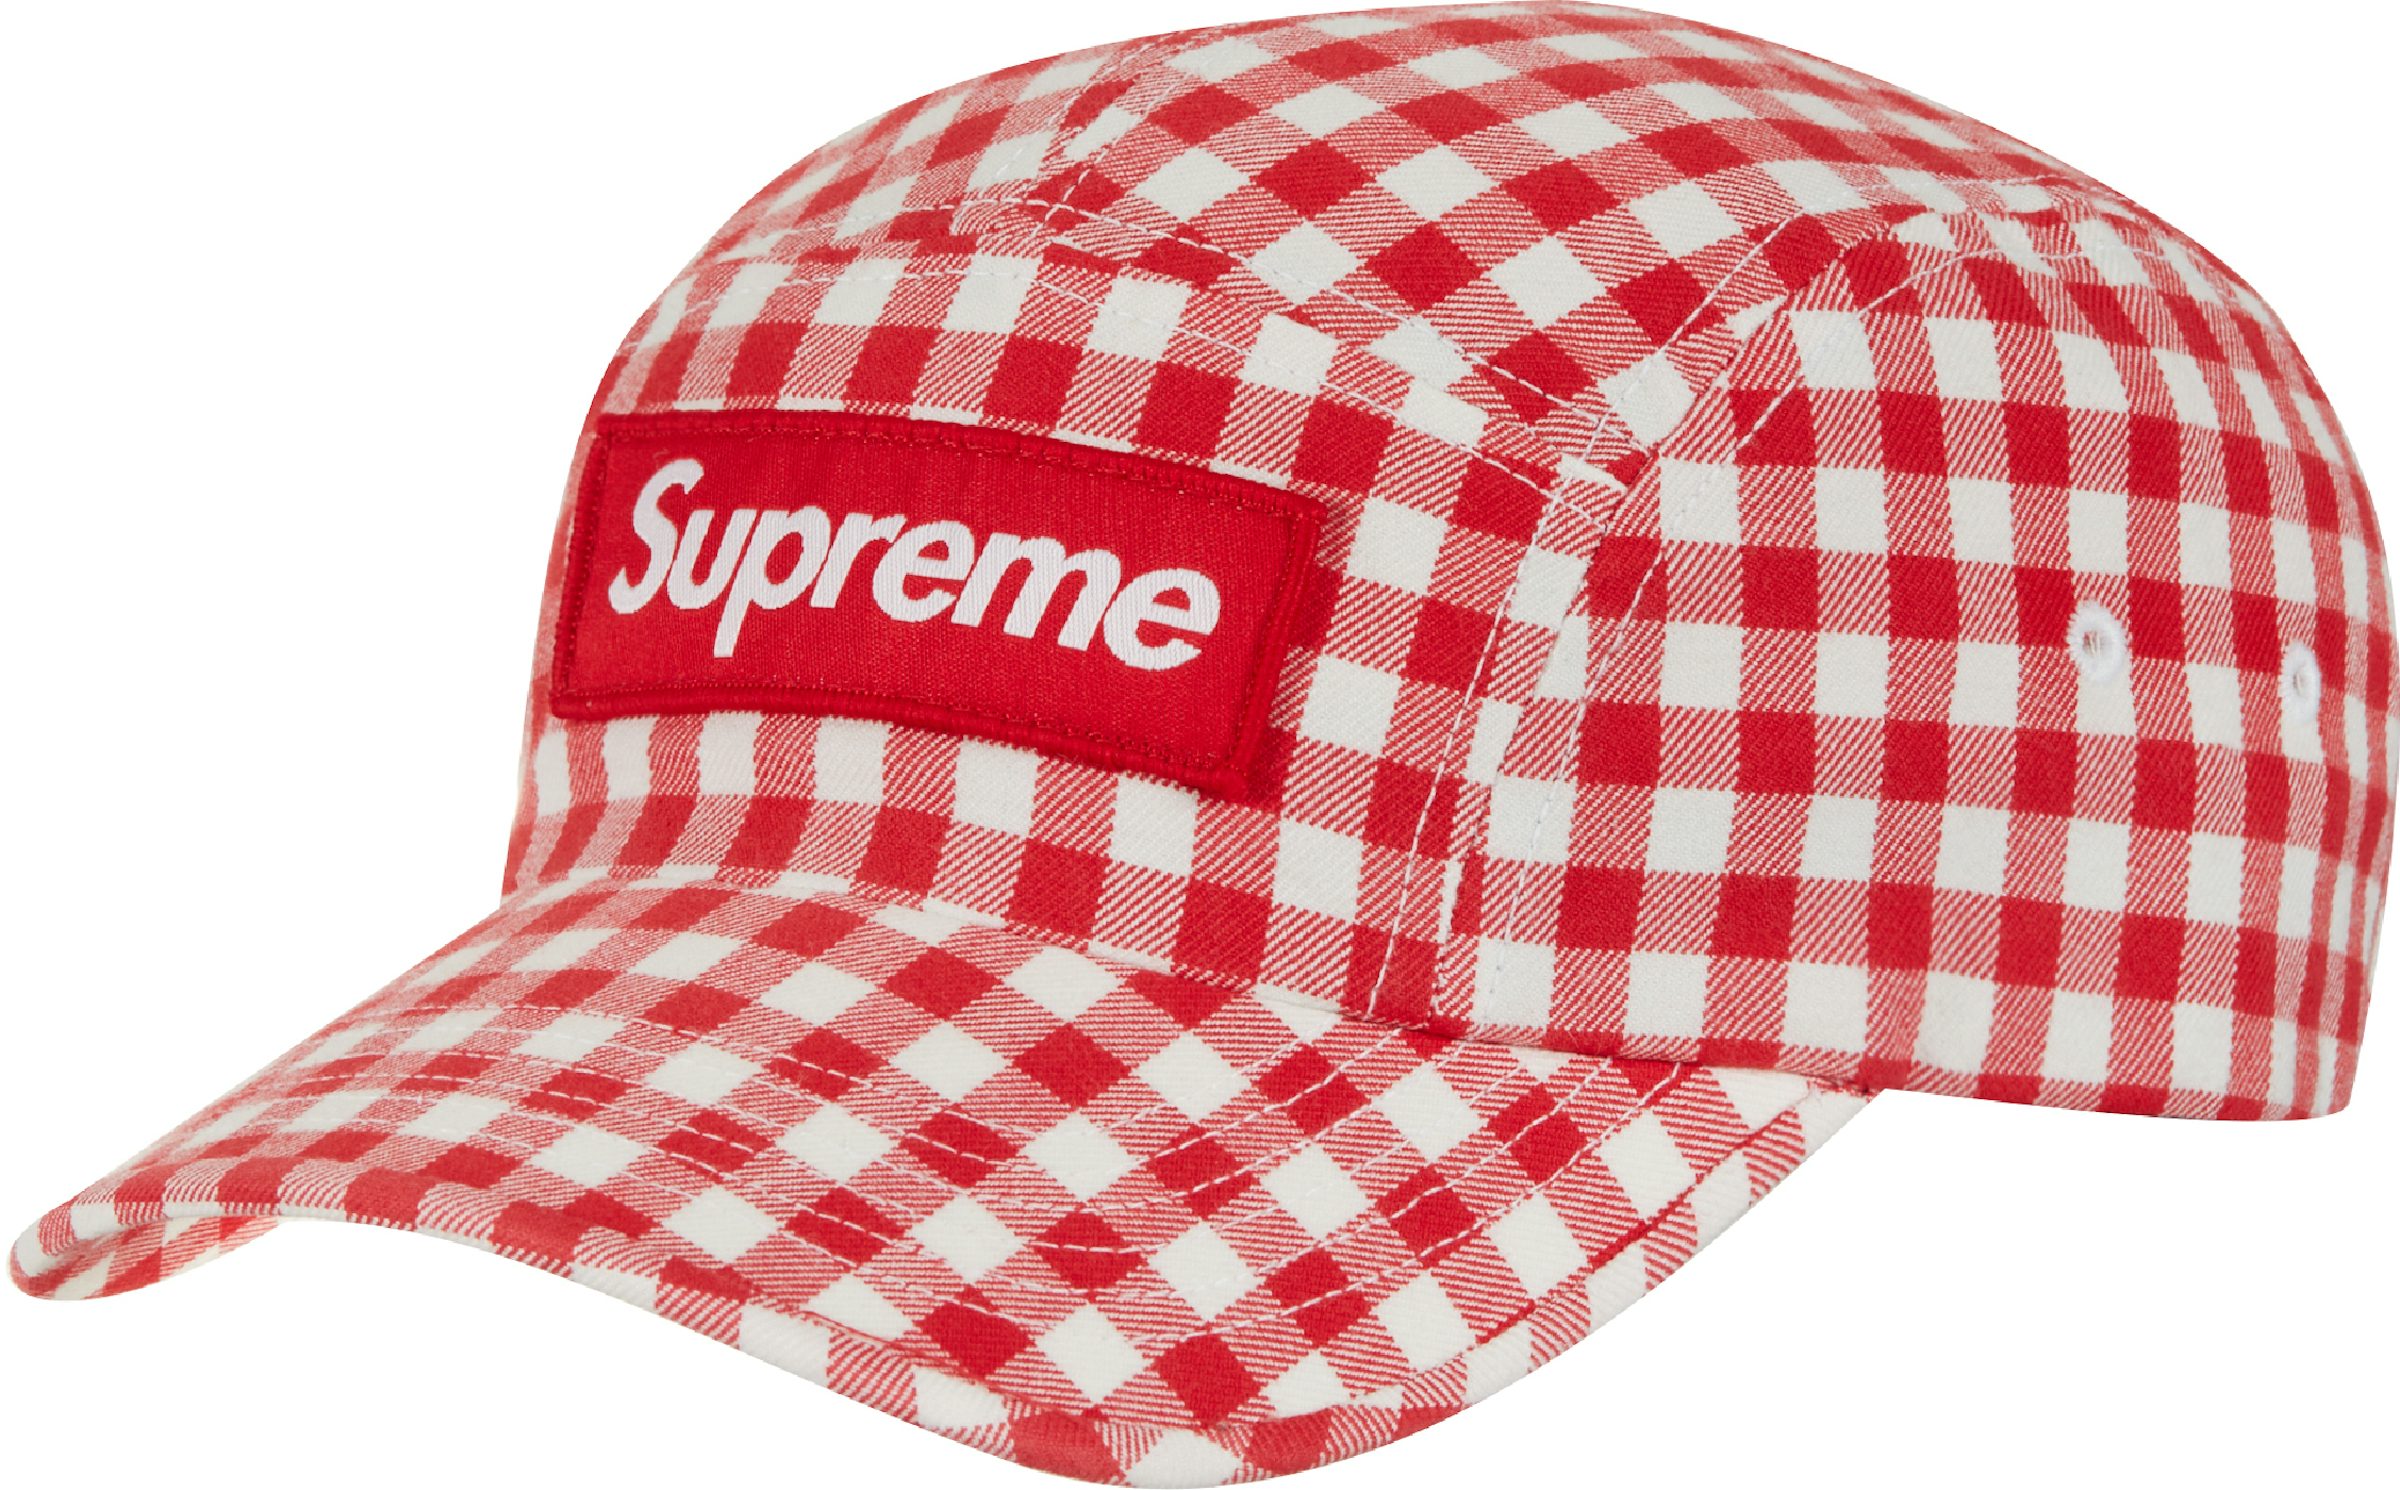 red supreme baseball cap